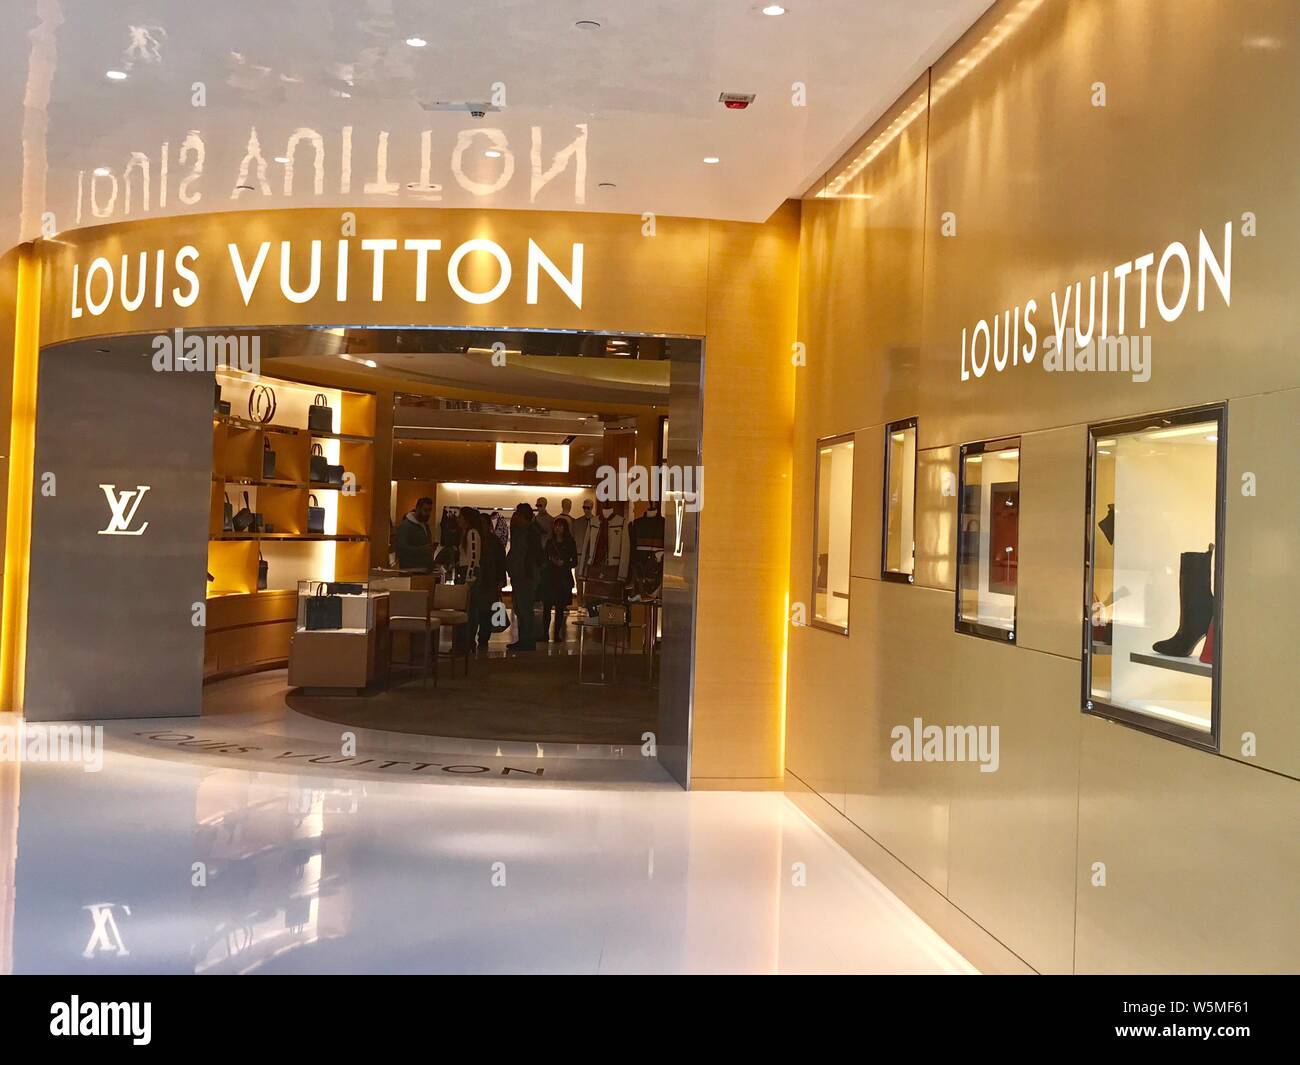 Louis Vuitton opens its first store at Dubai Duty Free in Dubai